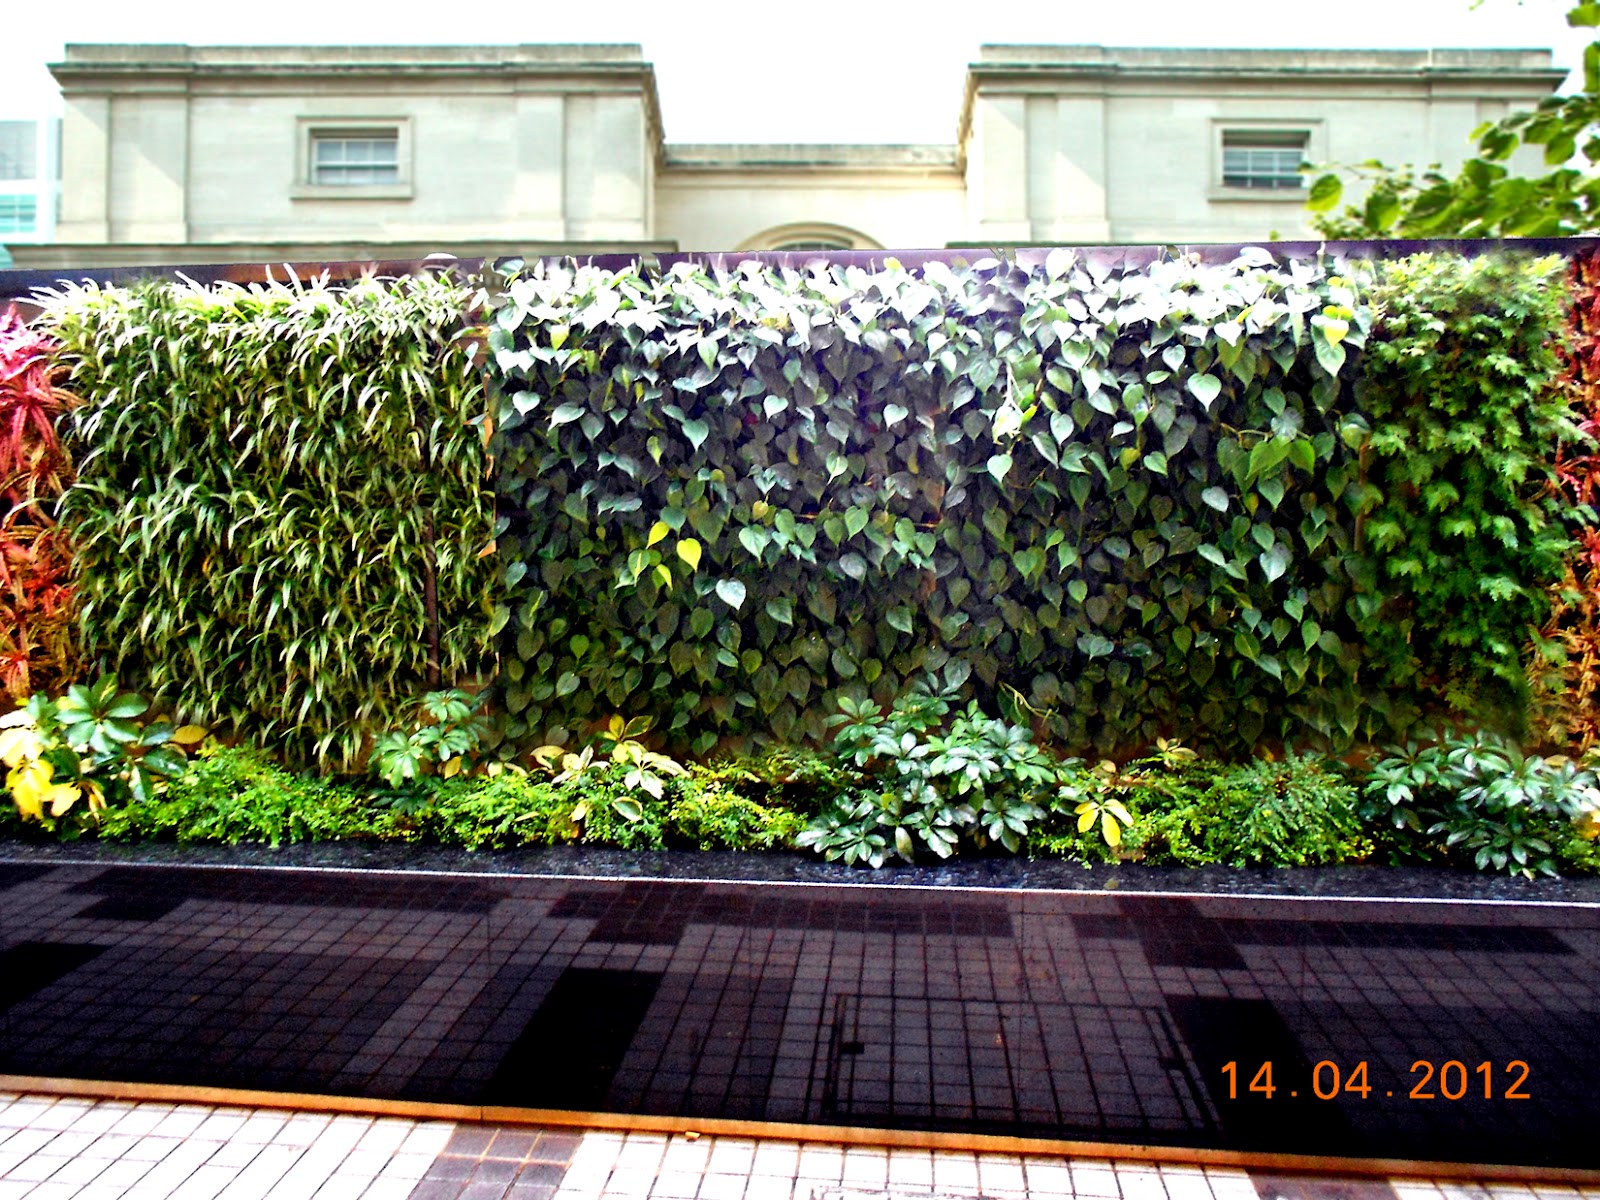 Vertical Garden Concept for Buildings: Greenwall Vertical Garden System